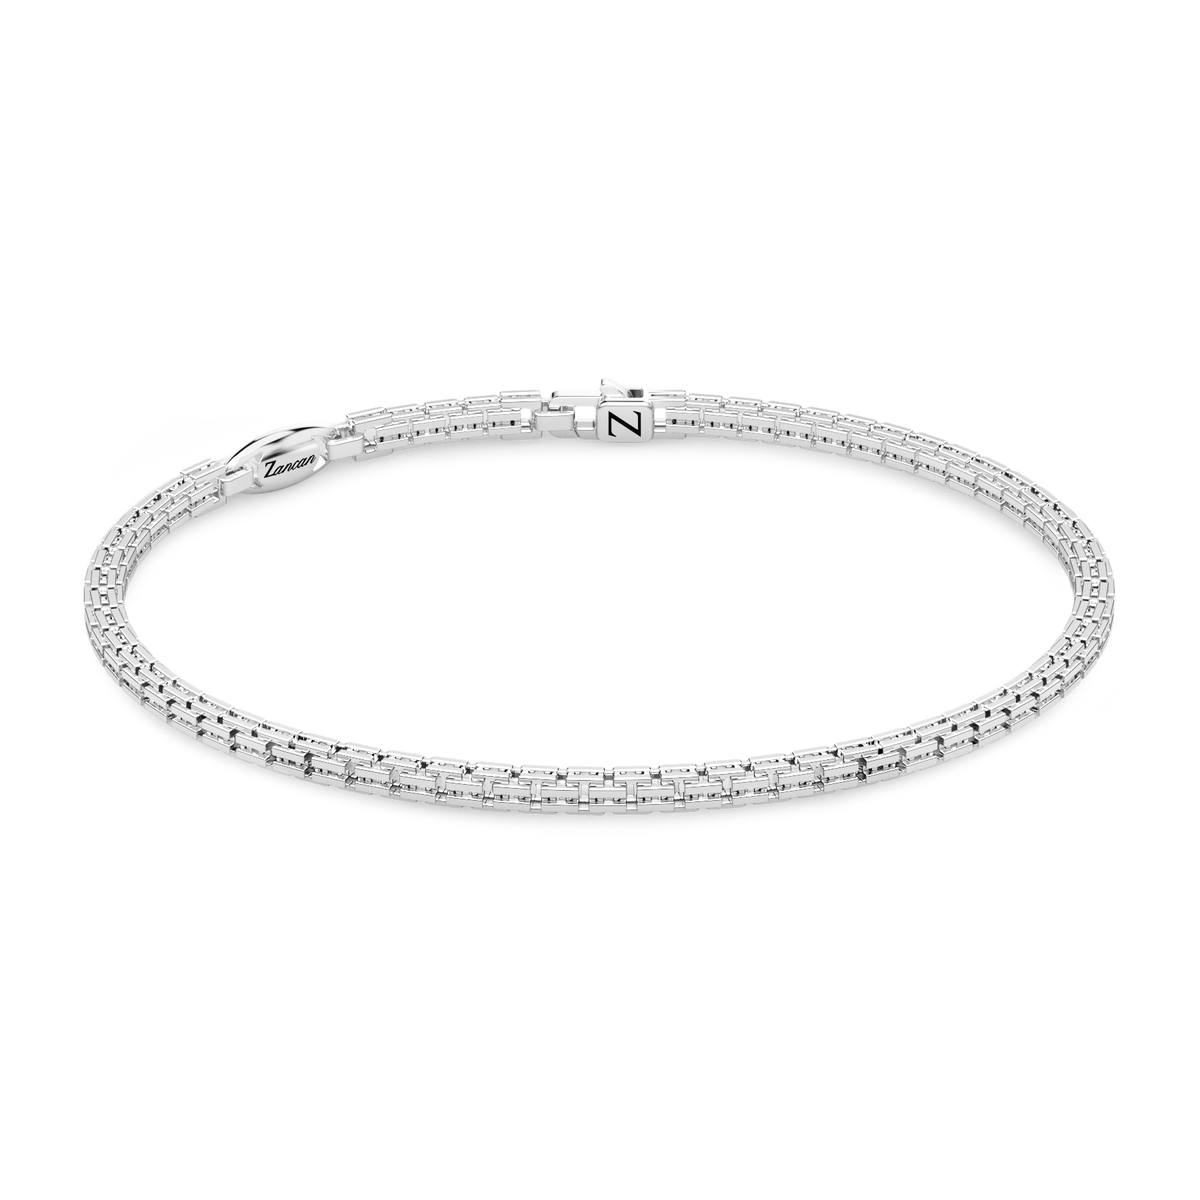 Silver link-only Bracelet